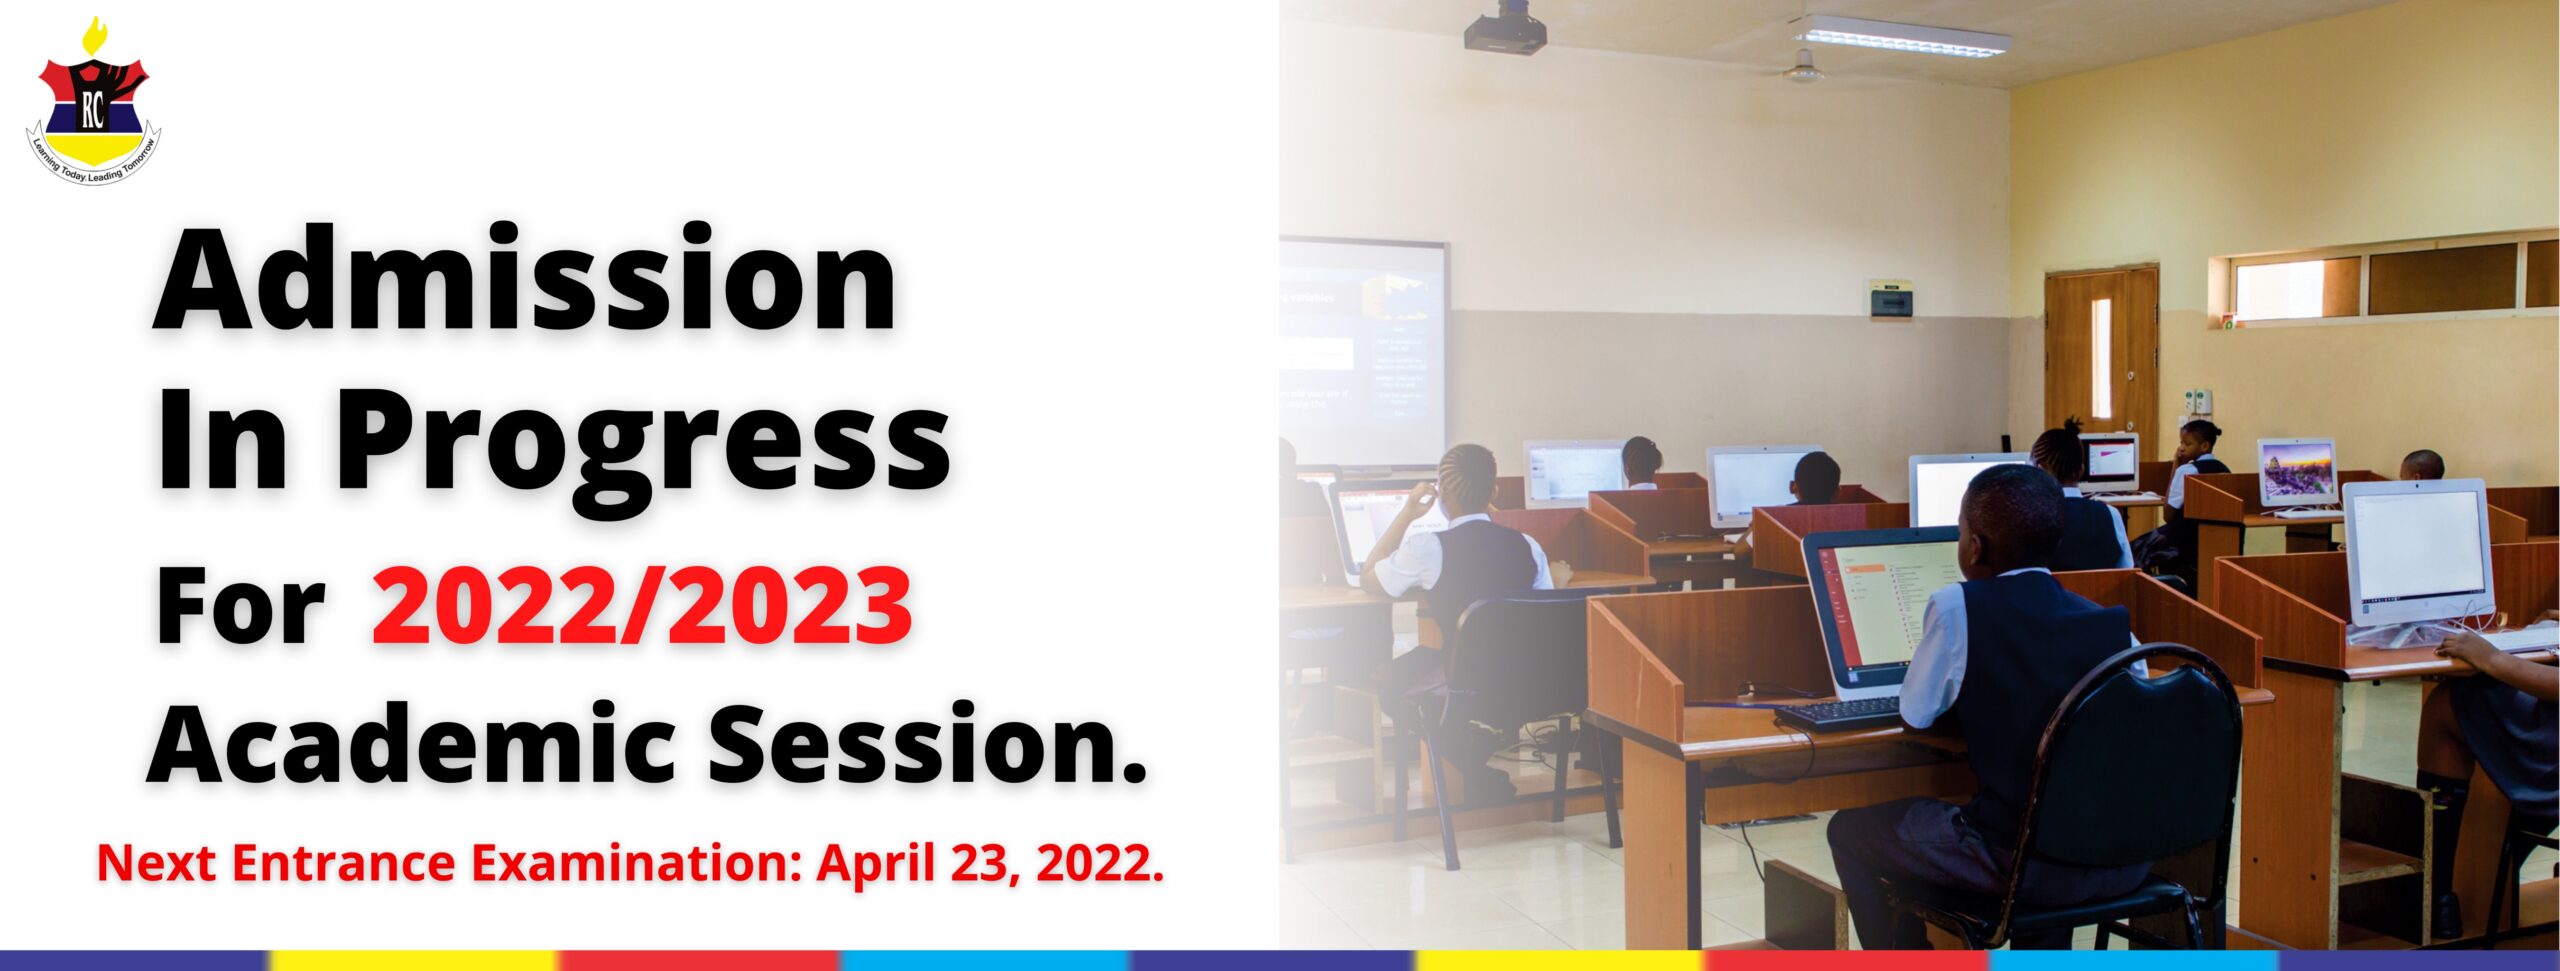 April 23 2022 Entrance Examination